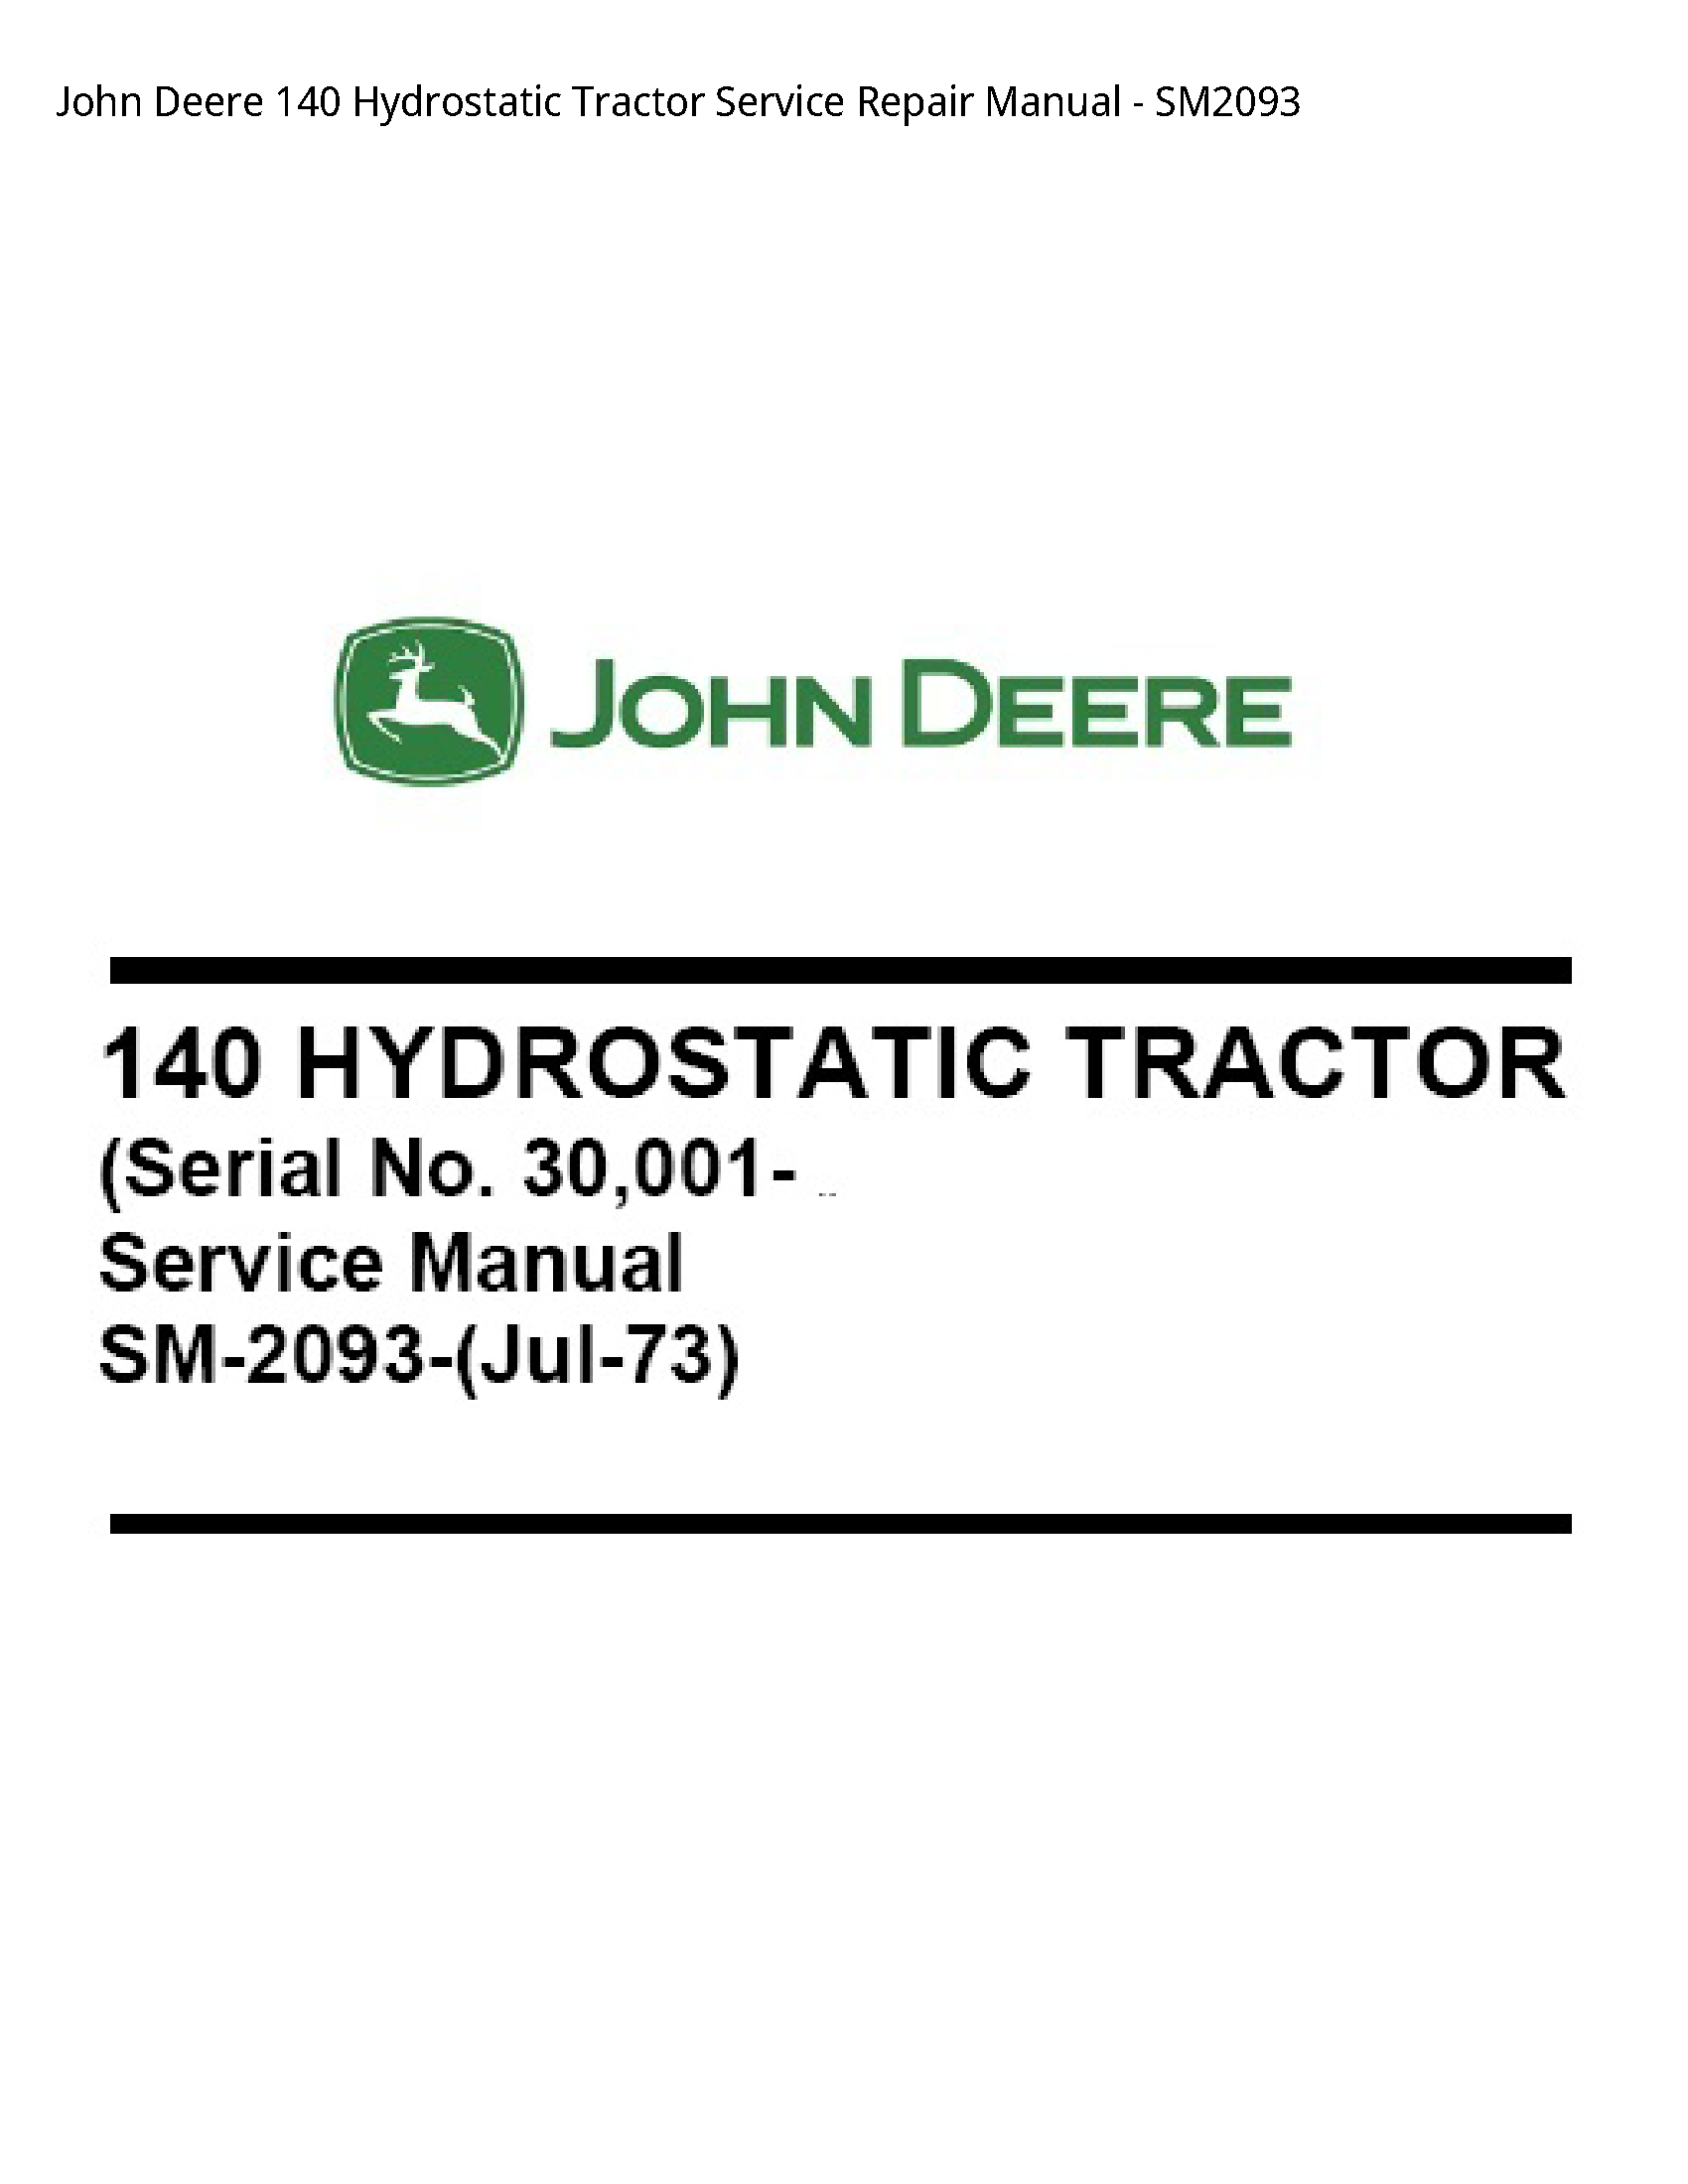 John Deere 140 Hydrostatic Tractor manual